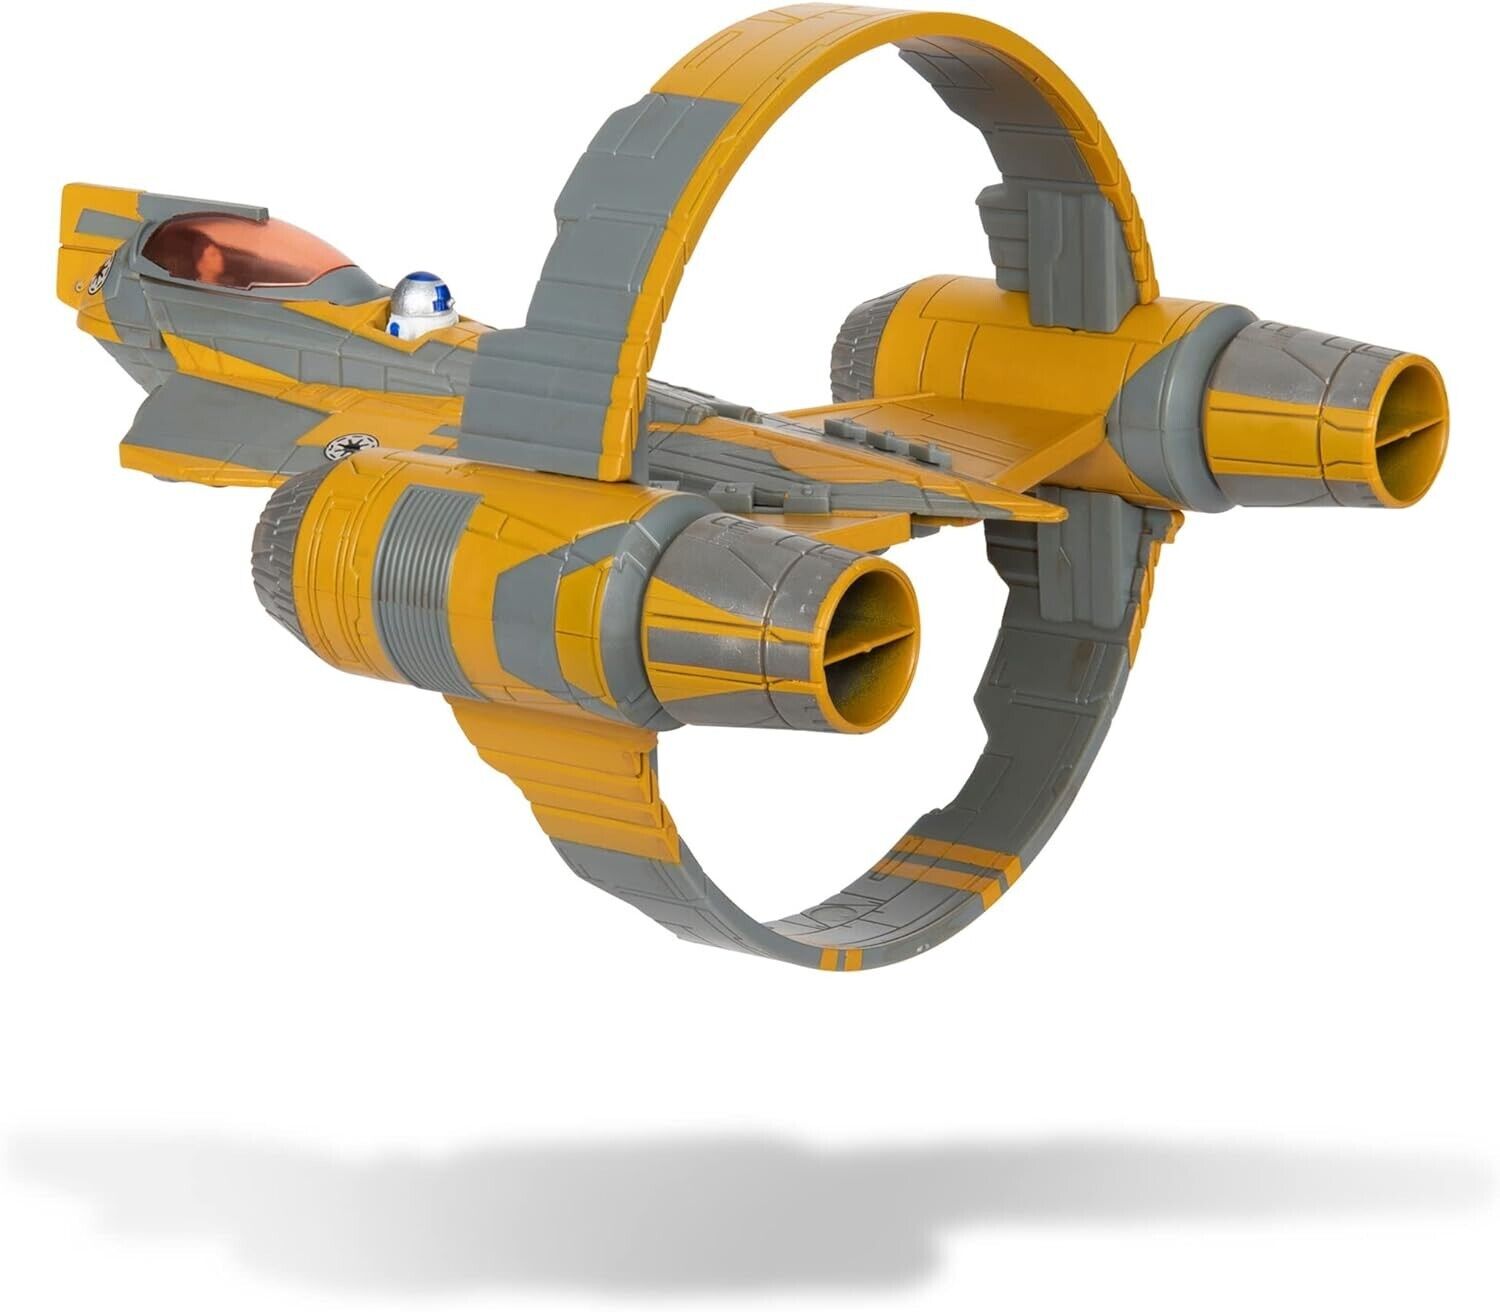 STAR WARS Micro Galaxy Squadron Anakin Skywalker's Jedi Starfighter - 5-Inch Sta